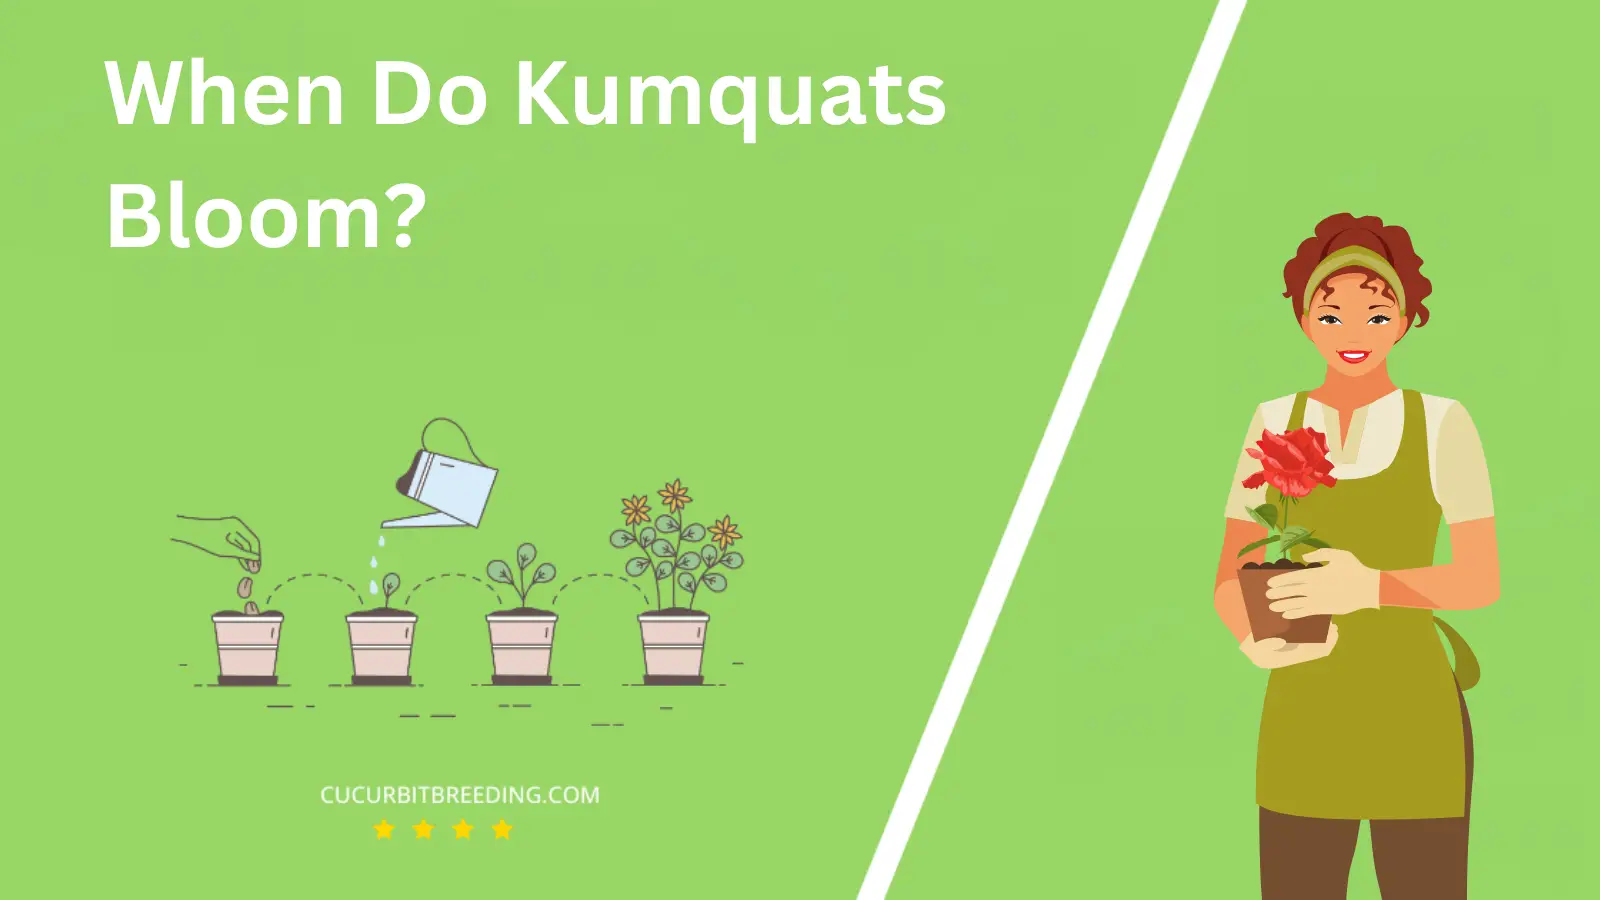 When Do Kumquats Bloom?